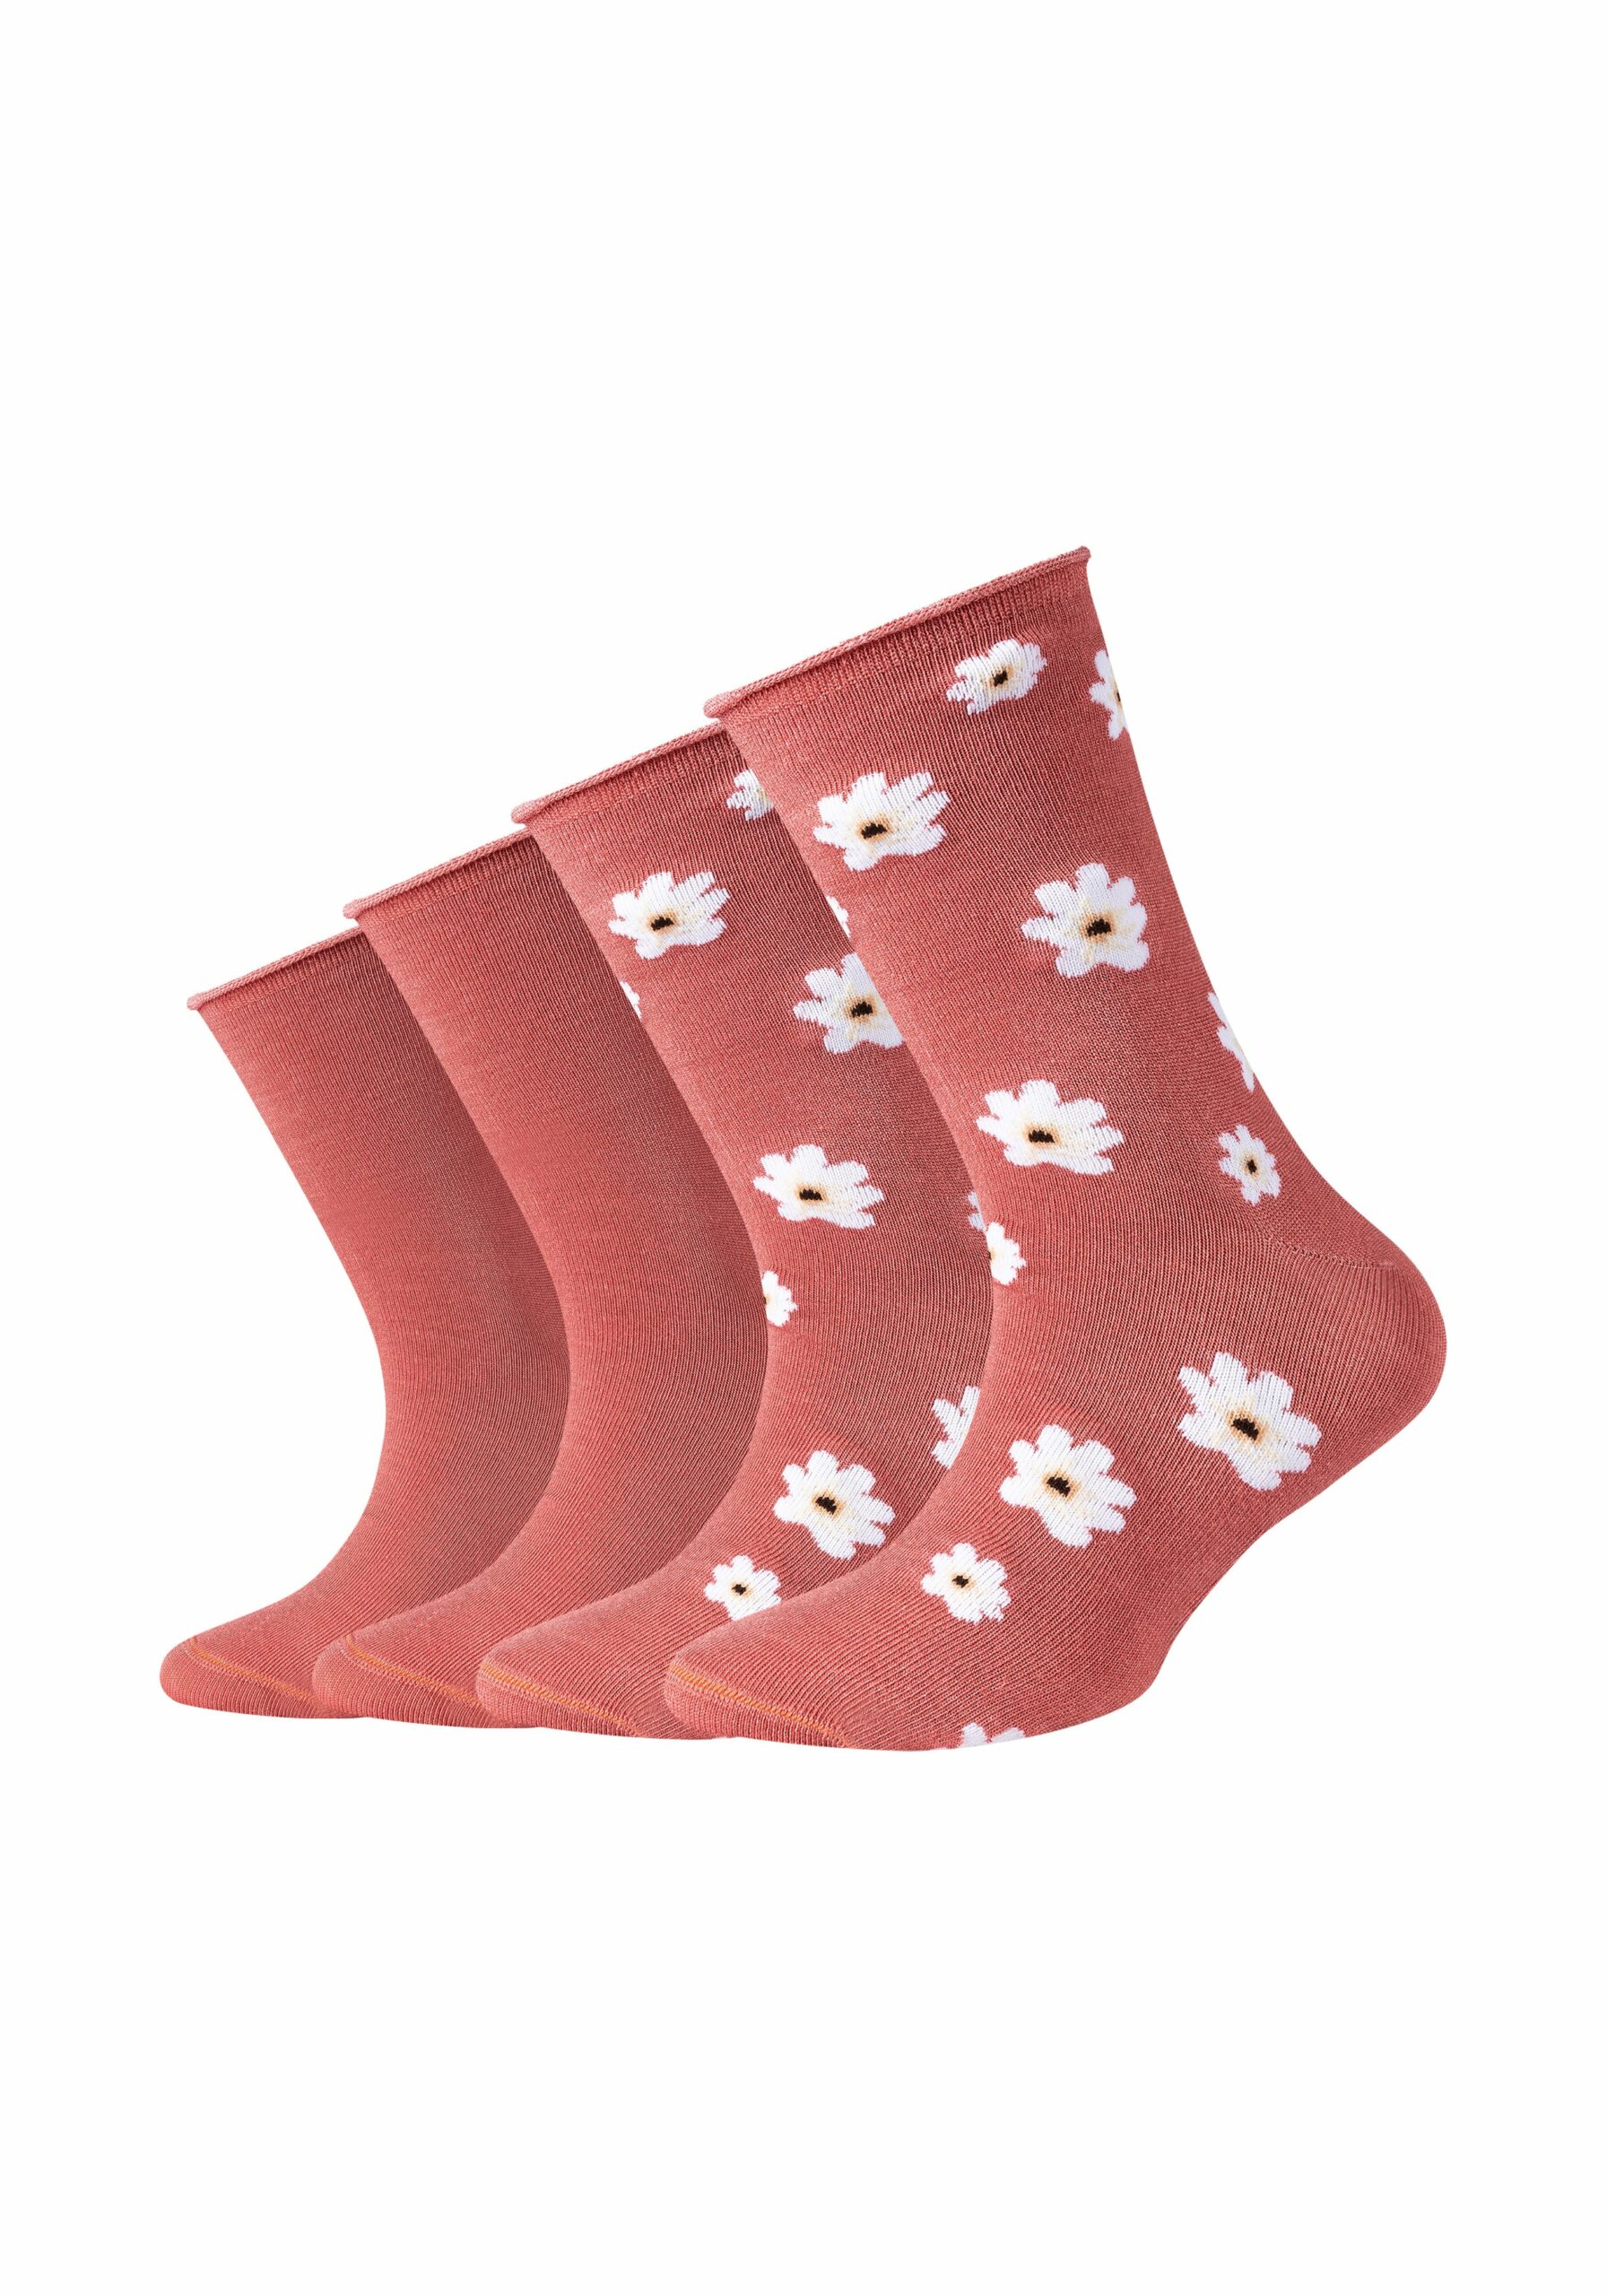 & bestellen Strümpfe Socken online